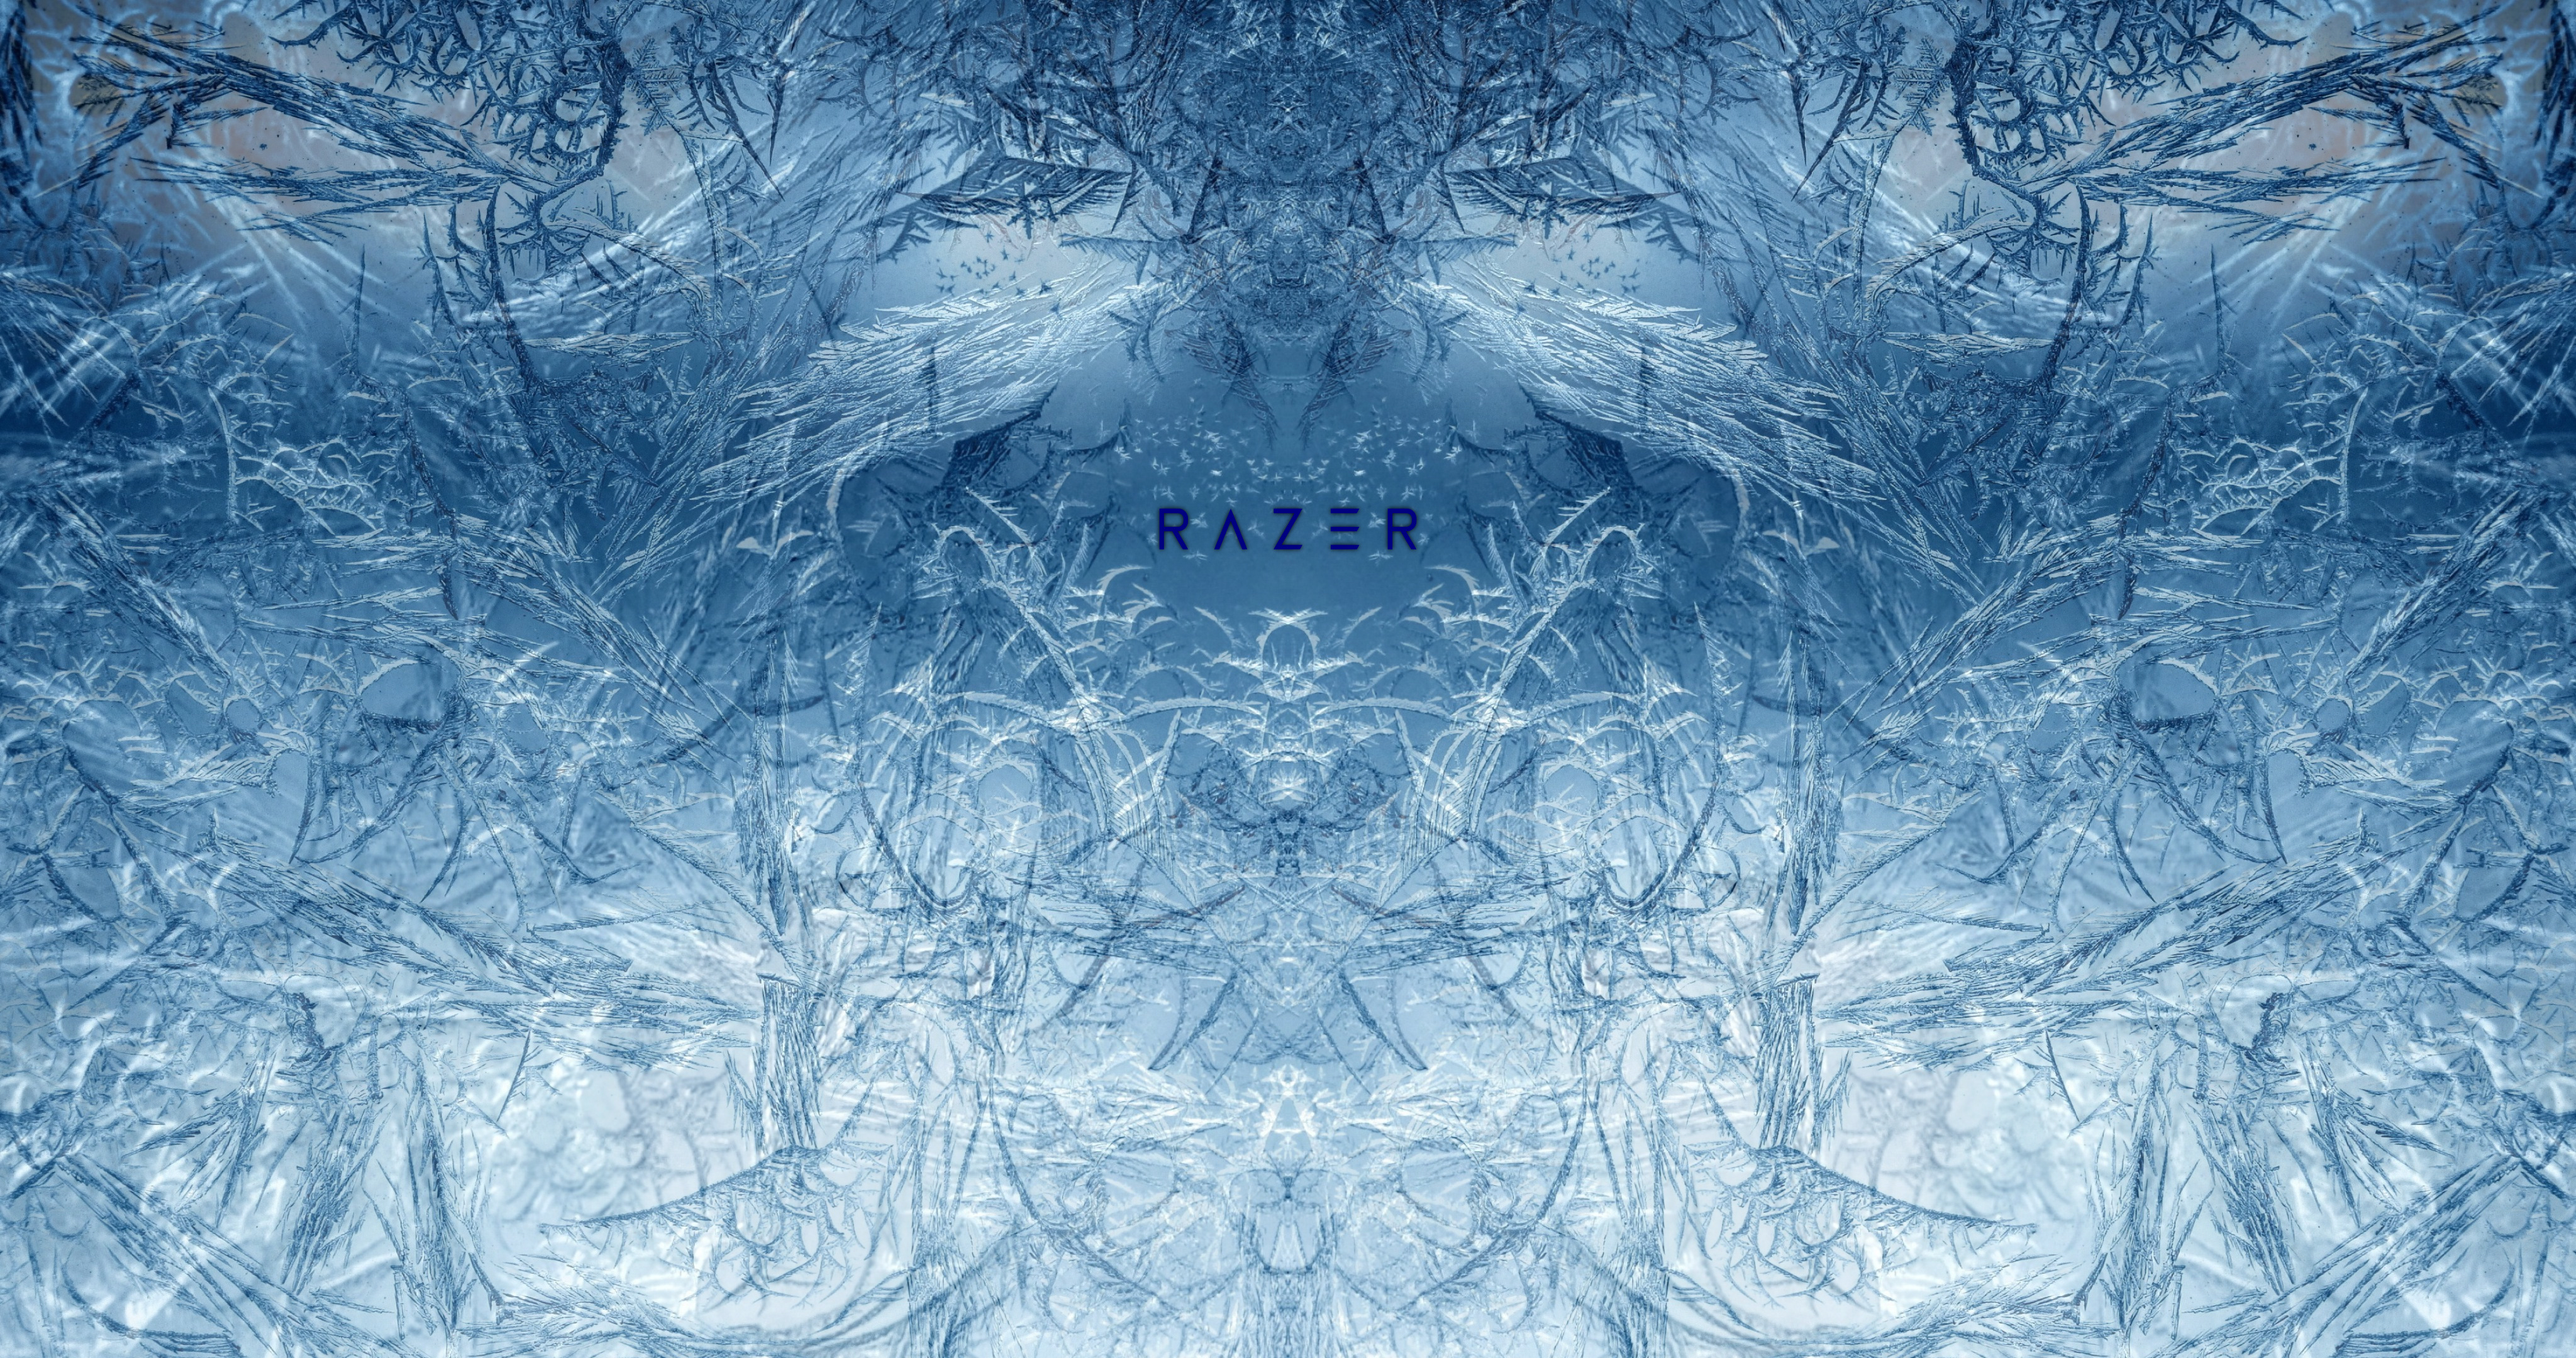 4K Razer Ice Blue Wallpaper, HD Artist 4K Wallpapers, Images, Photos